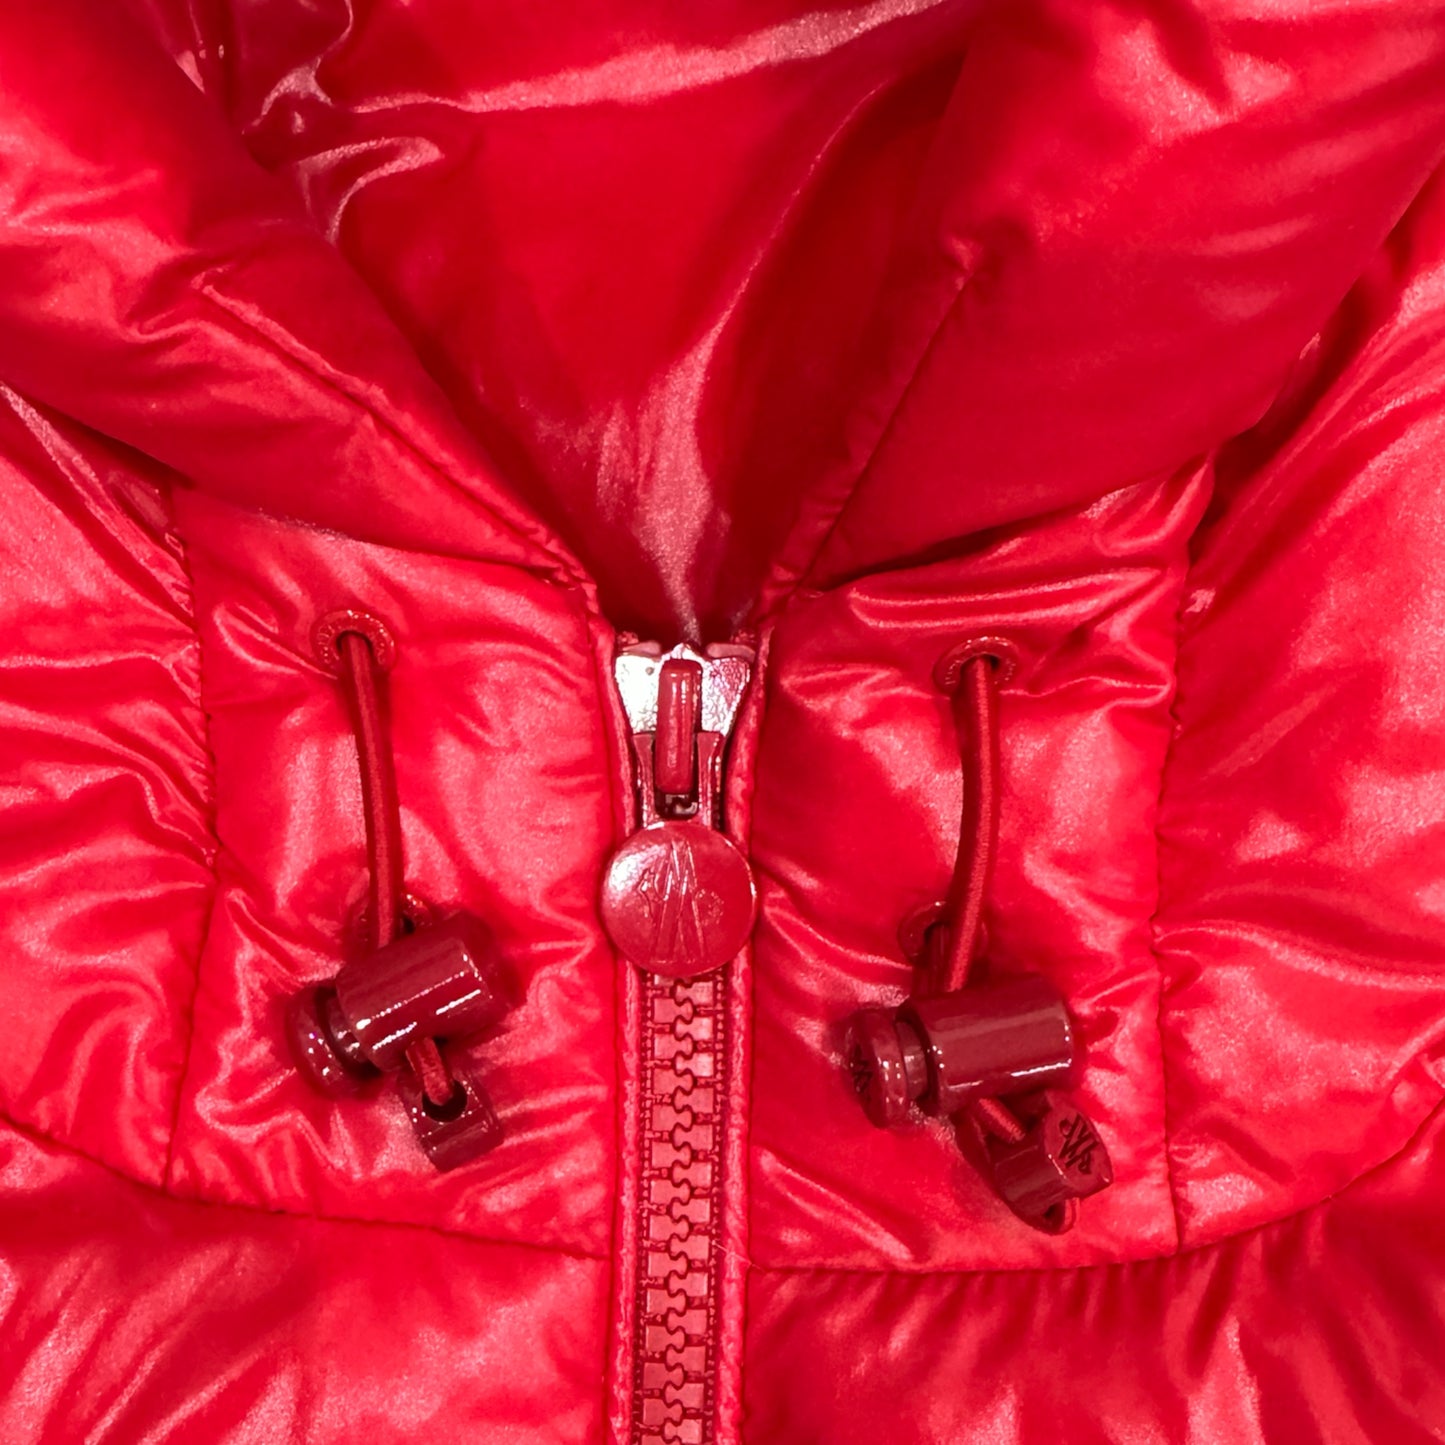 Moncler Red Puffer Jacket size Medium